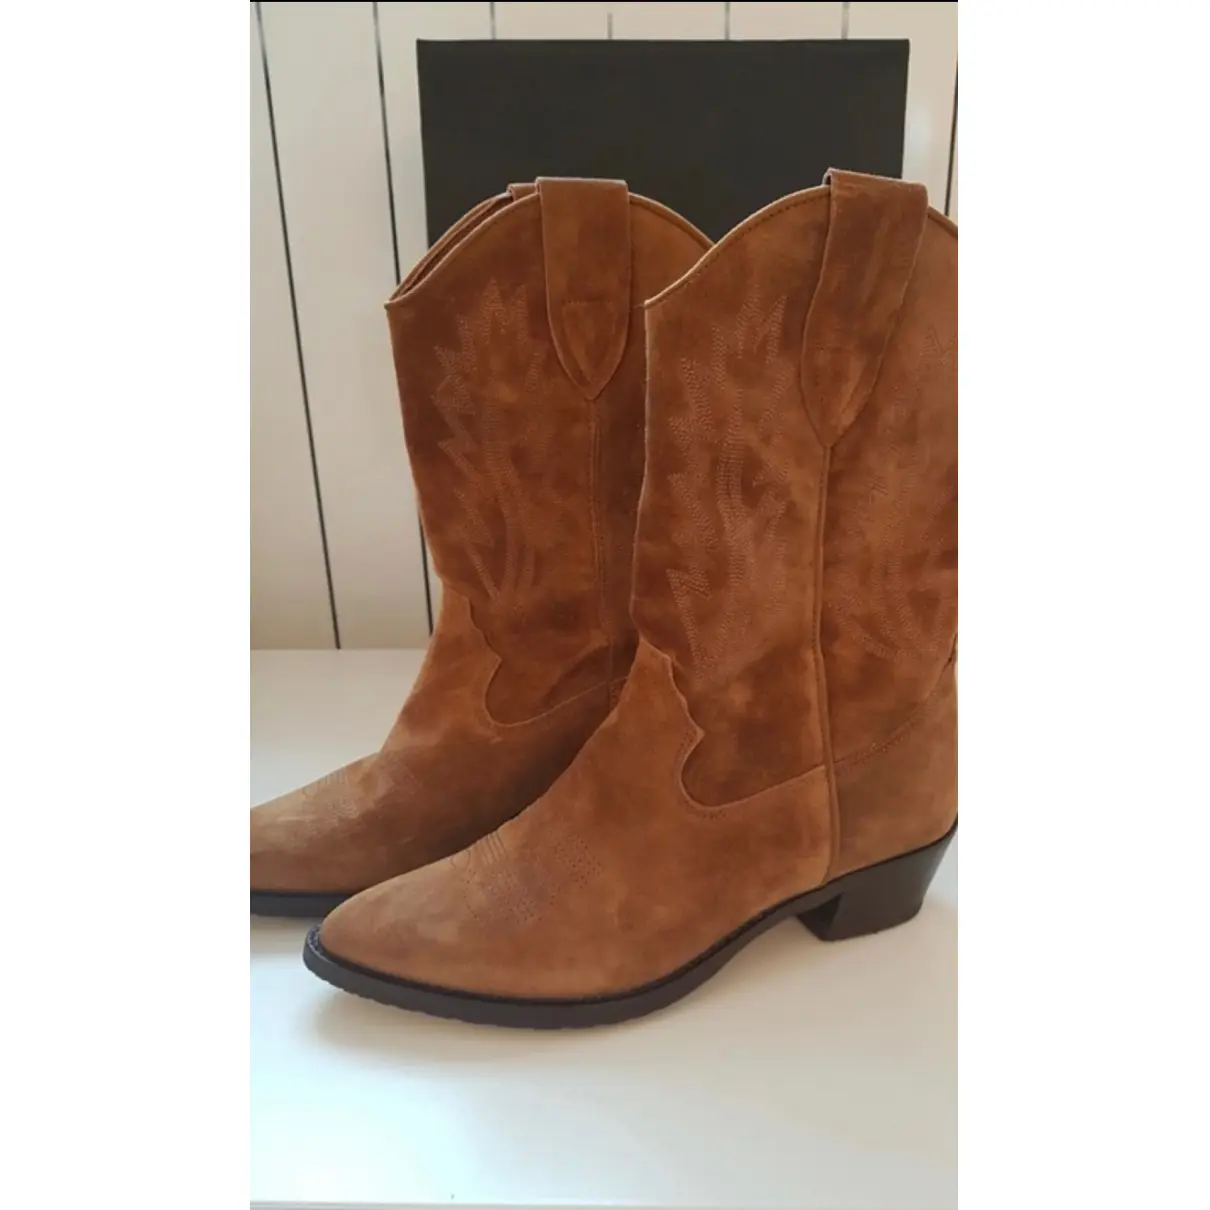 Buy Alpe Western boots online